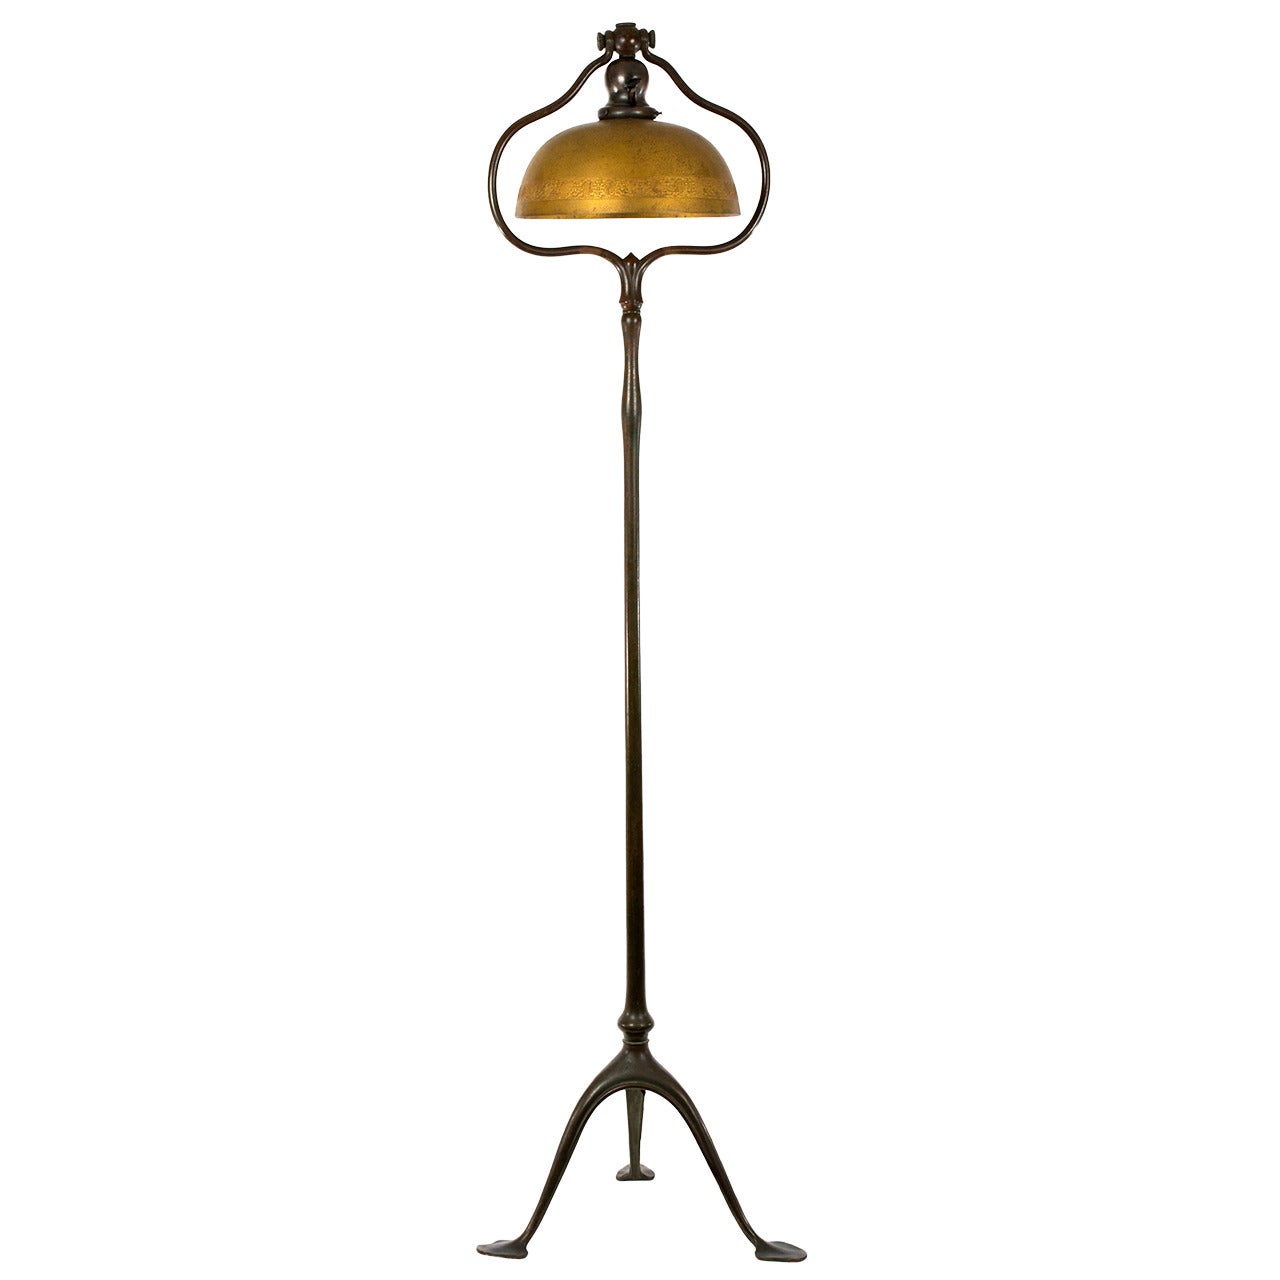 Bronze Art Nouveau Tiffany Floor Lamp with Original Shade